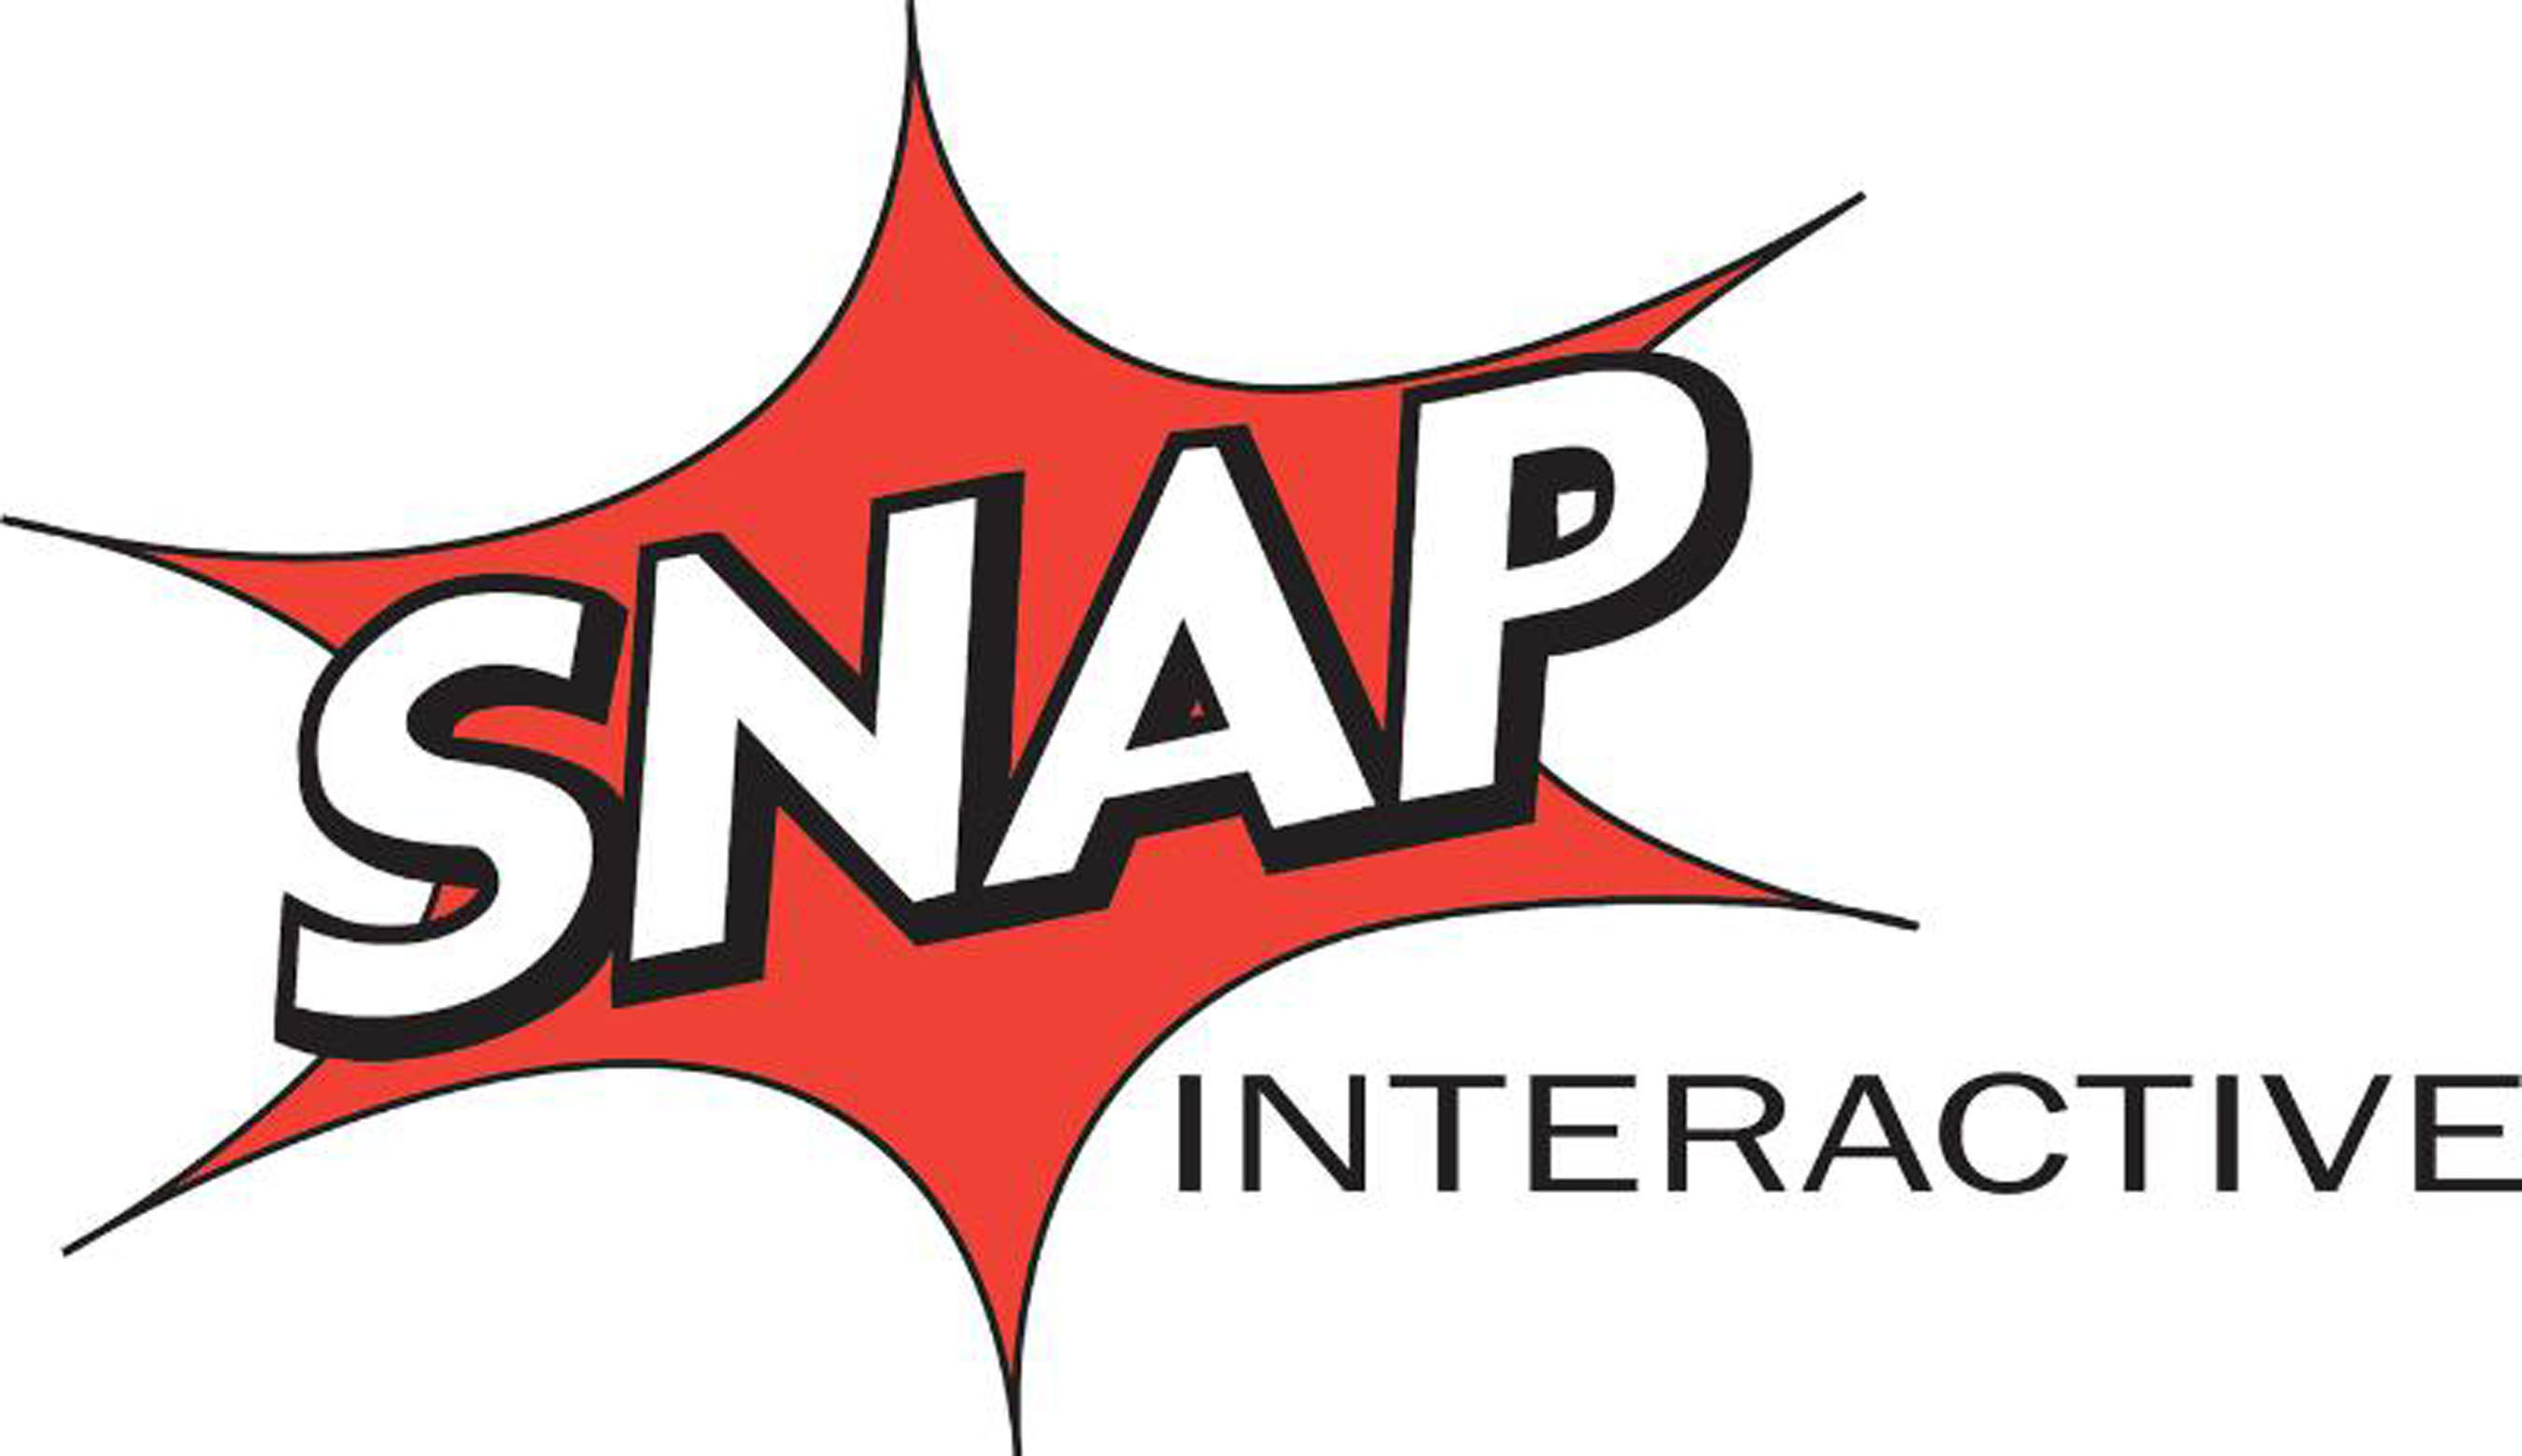 SNAP INTERACTIVE, INC. (PRNewsFoto/SNAP Interactive, Inc.) (PRNewsFoto/SNAP INTERACTIVE, INC.)